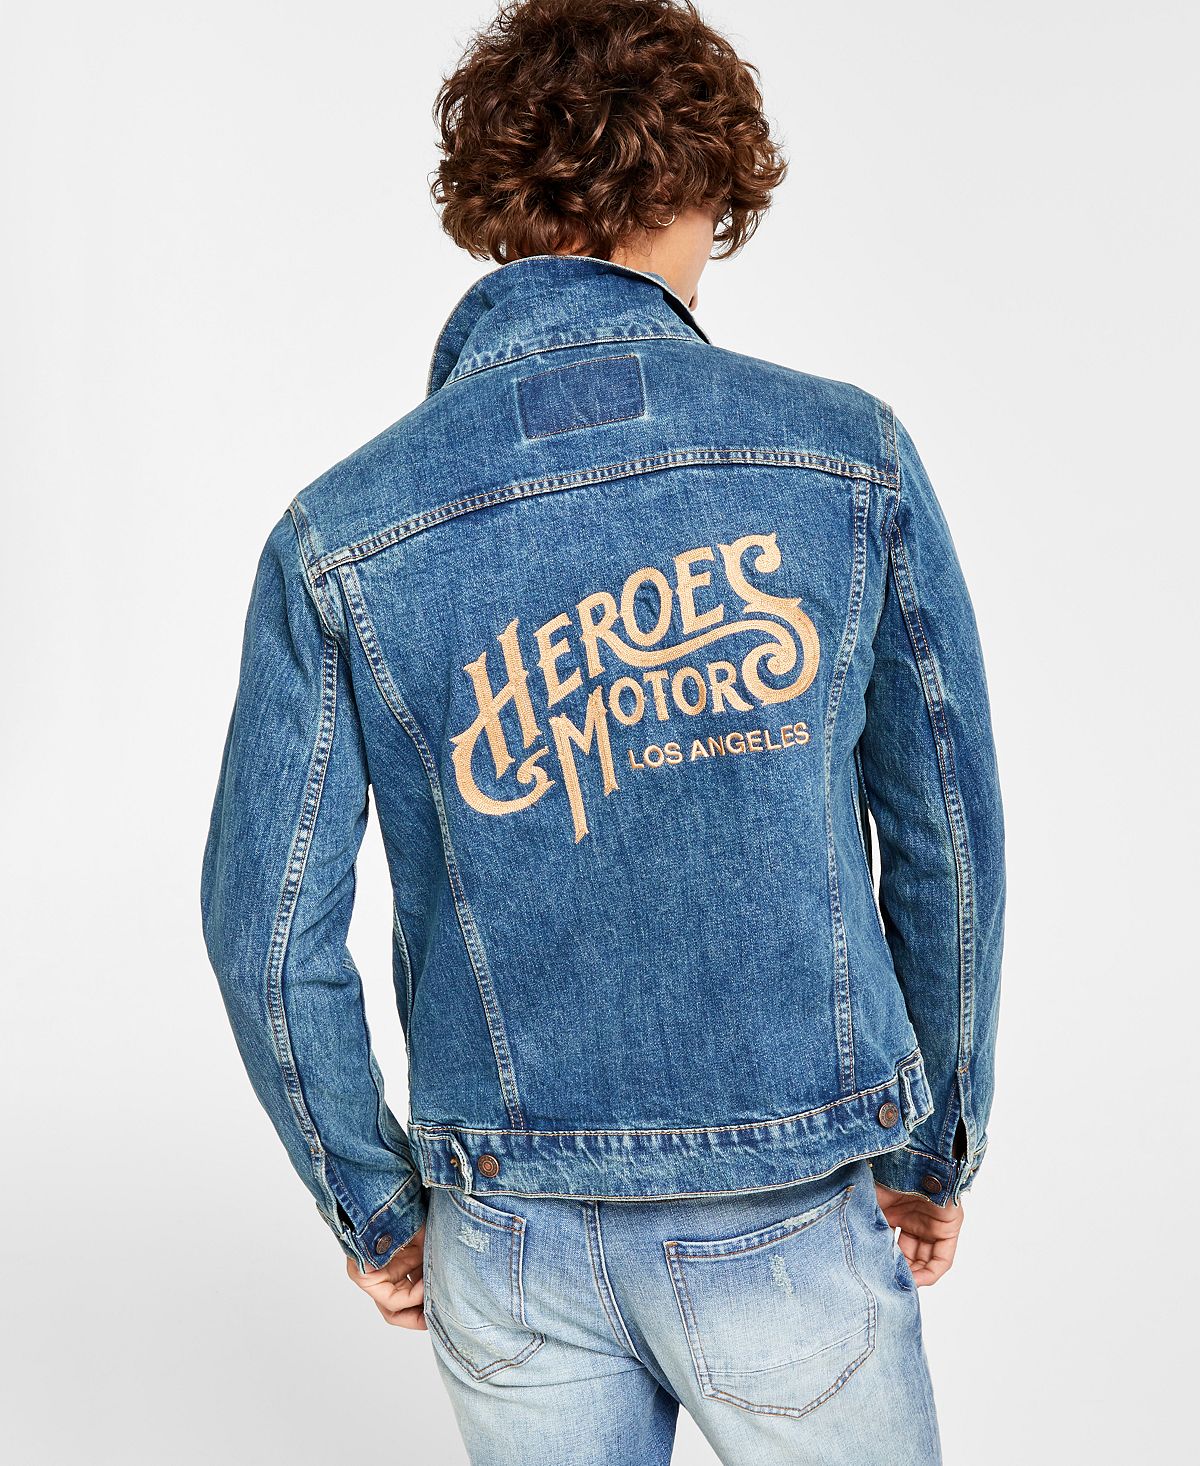 Heroes Motors Legendary Denim Jacket Legendary